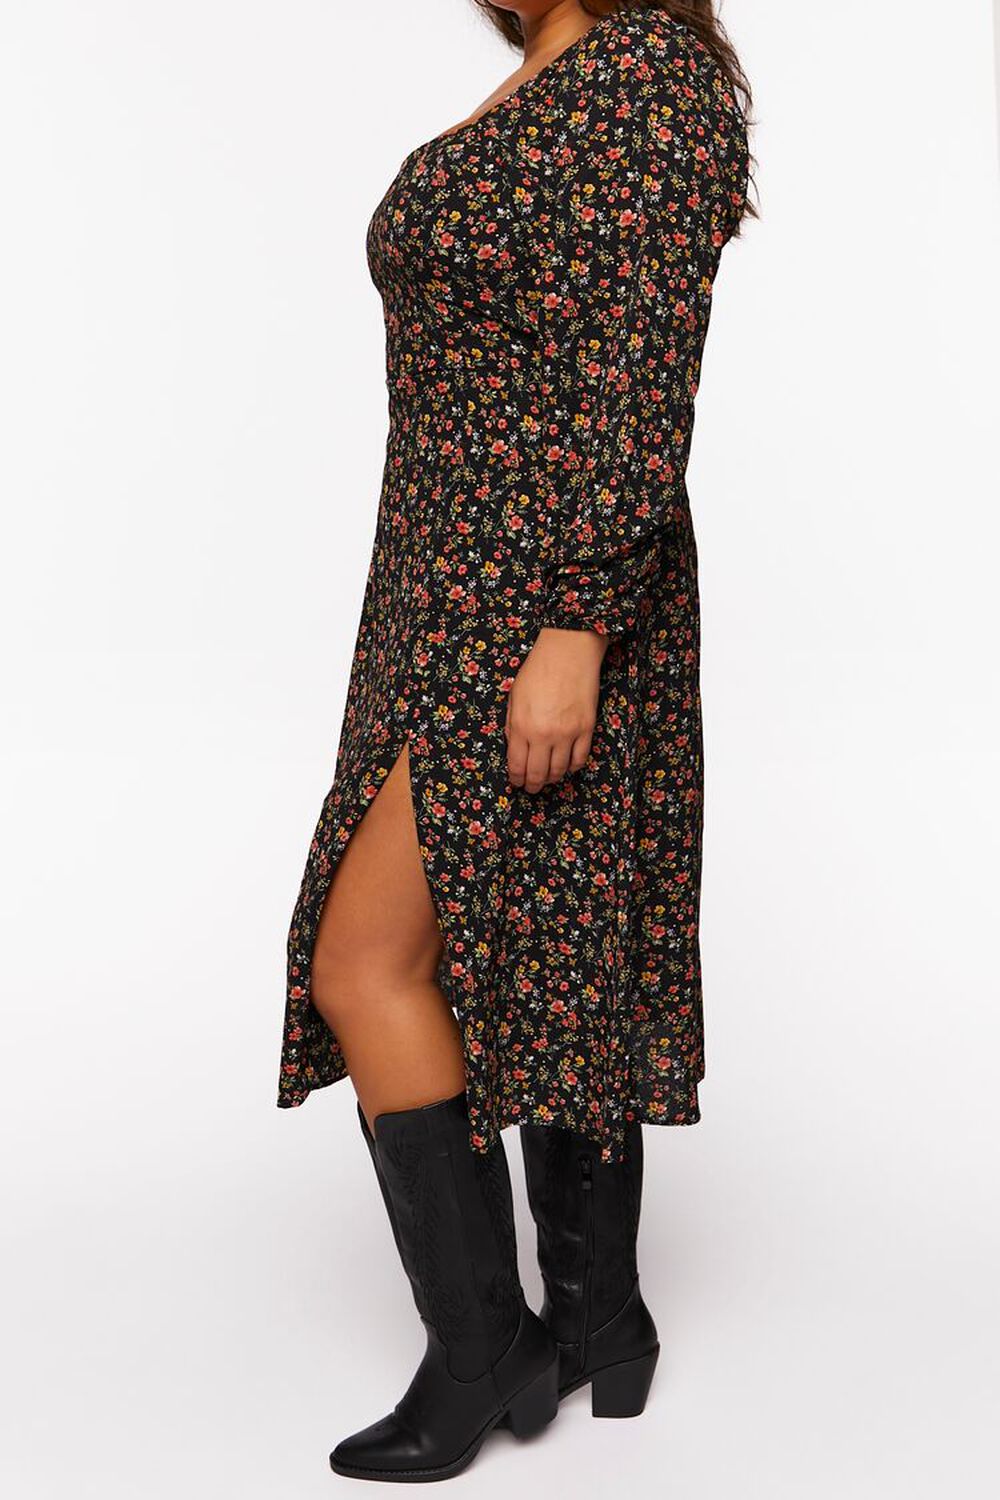 BLACK/MULTI Plus Size Ditsy Floral Midi Dress, image 2